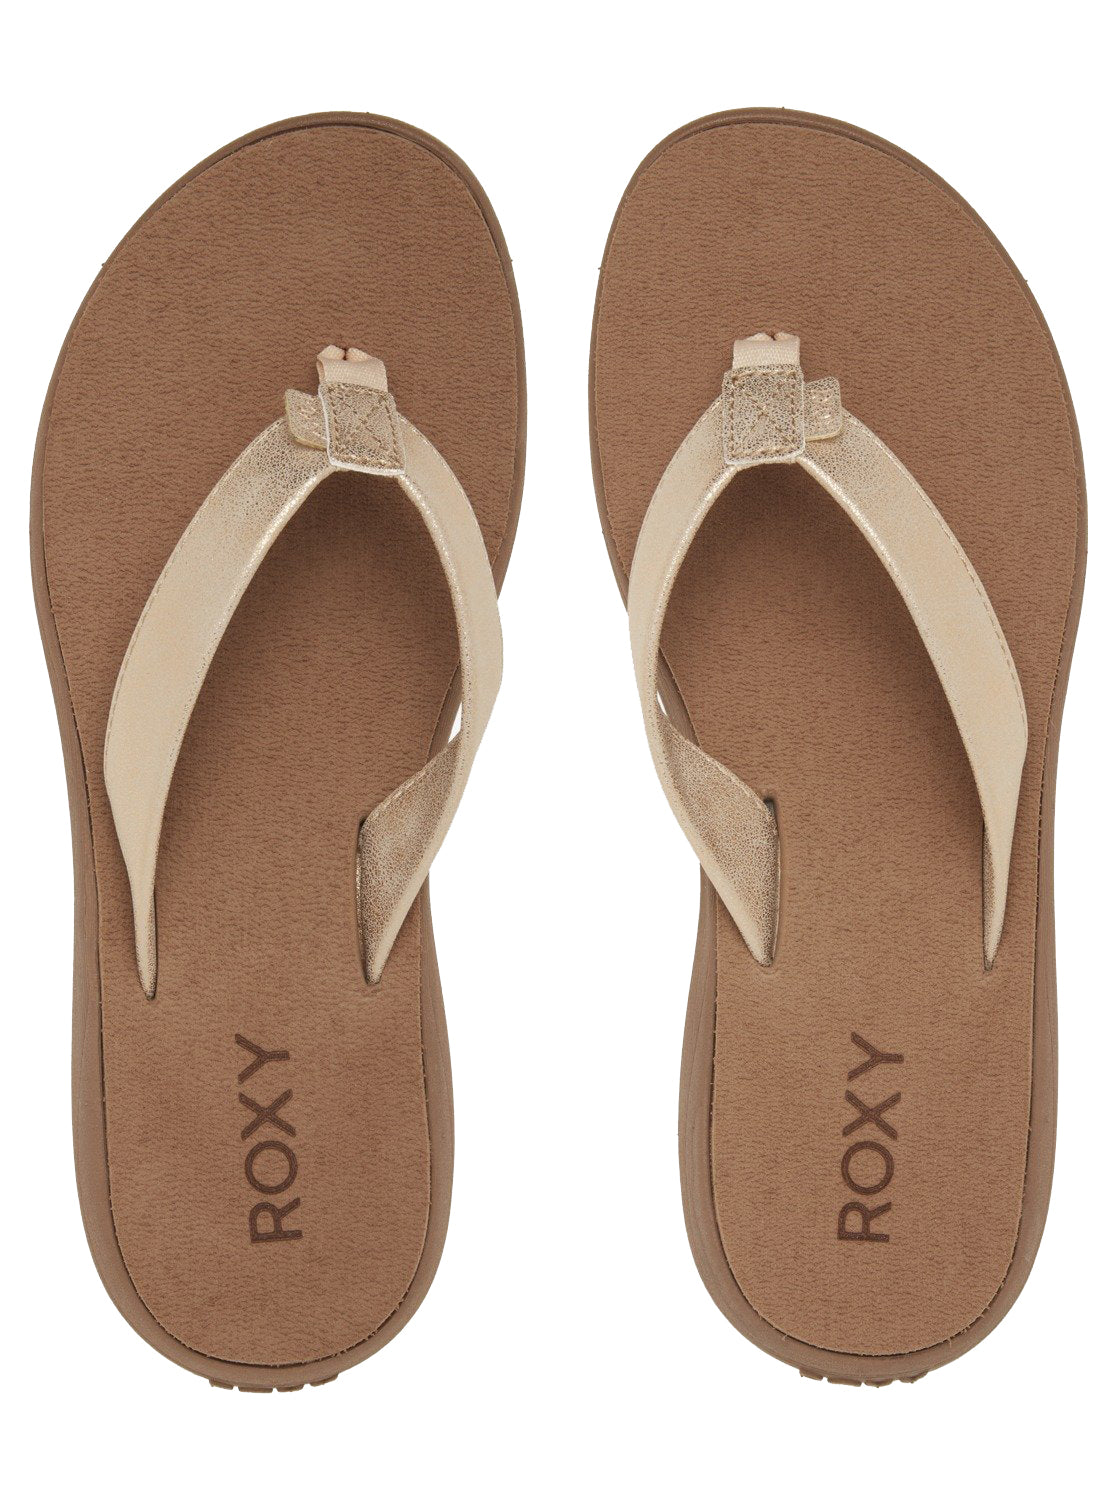 Roxy Lizzie Womens Sandal BRO-Bronze 9